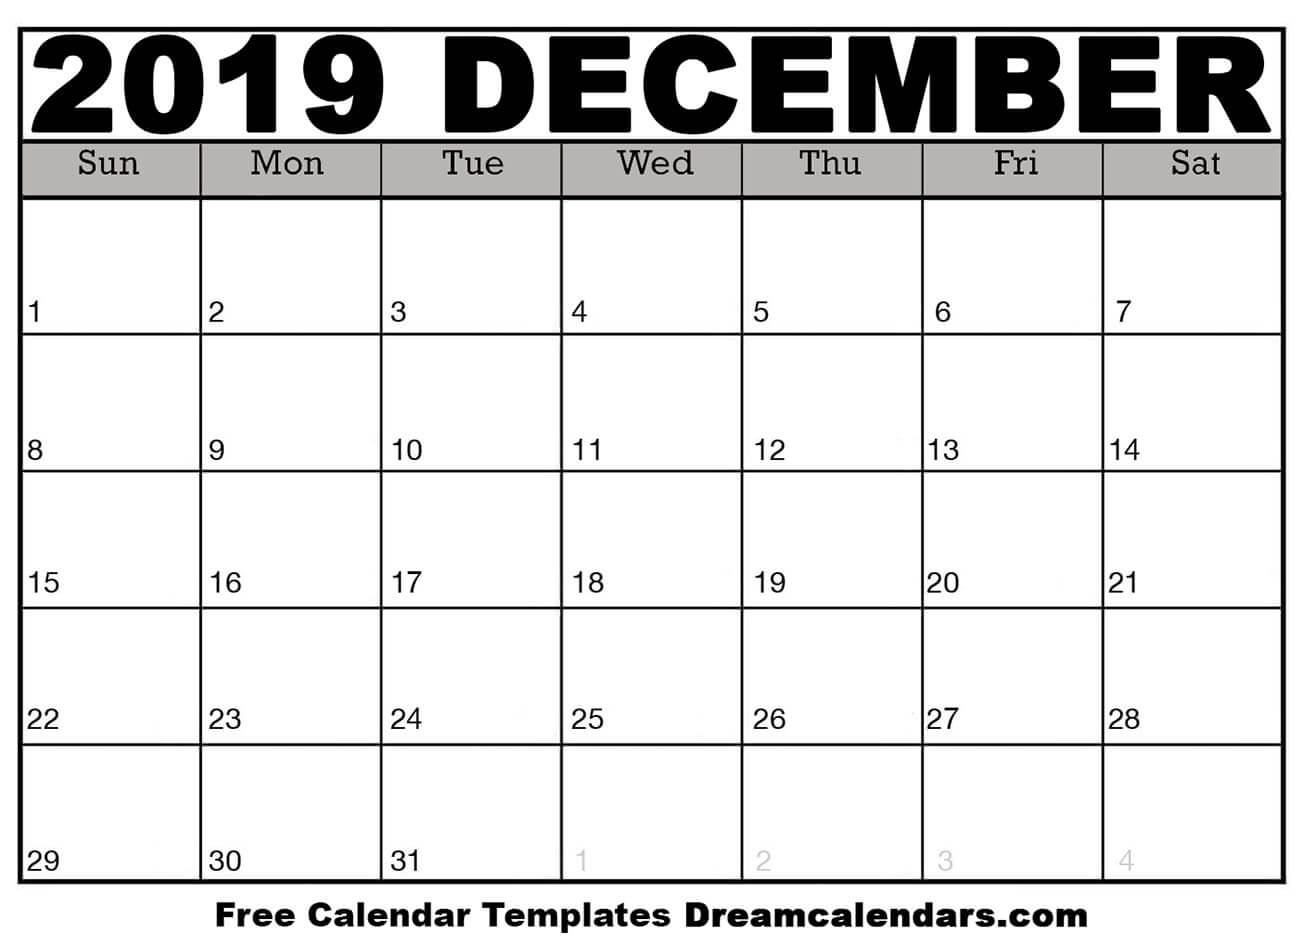 December 2019 Calendar Free Blank Printable With Holidays